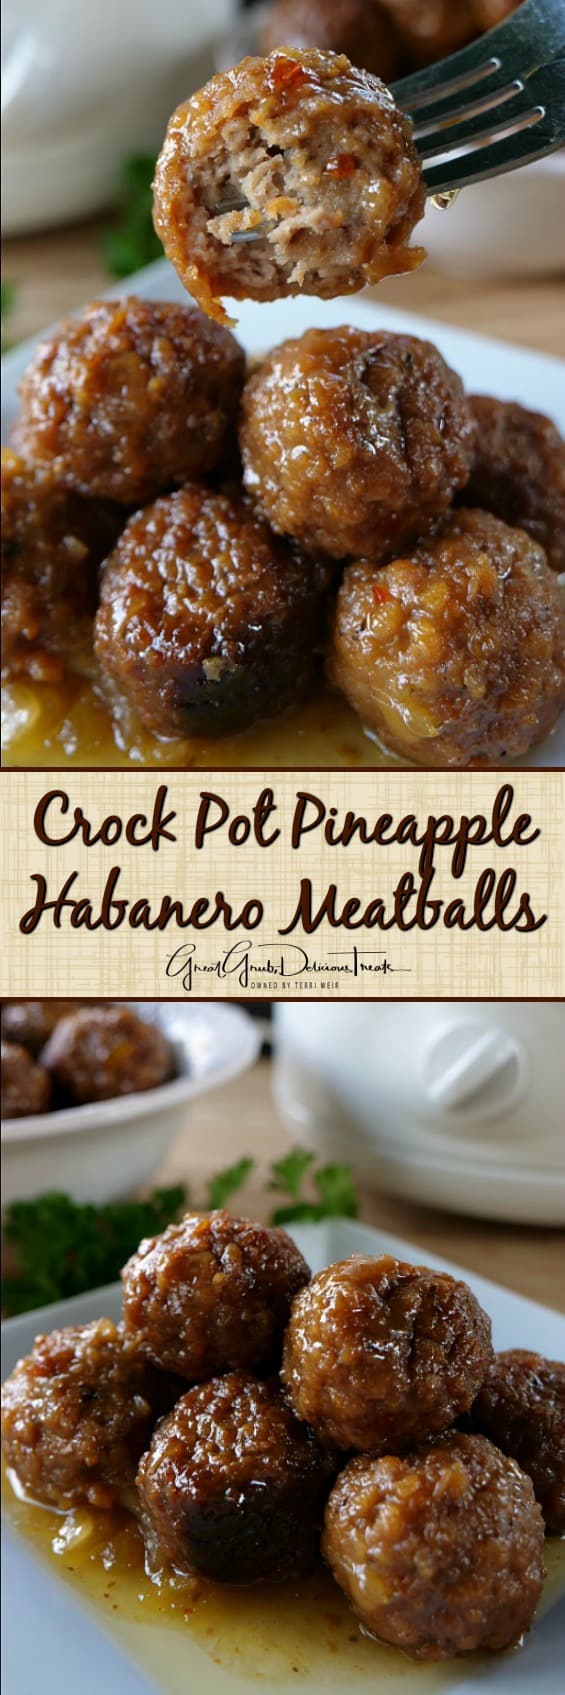 Crock Pot Pineapple Habanero Meatballs